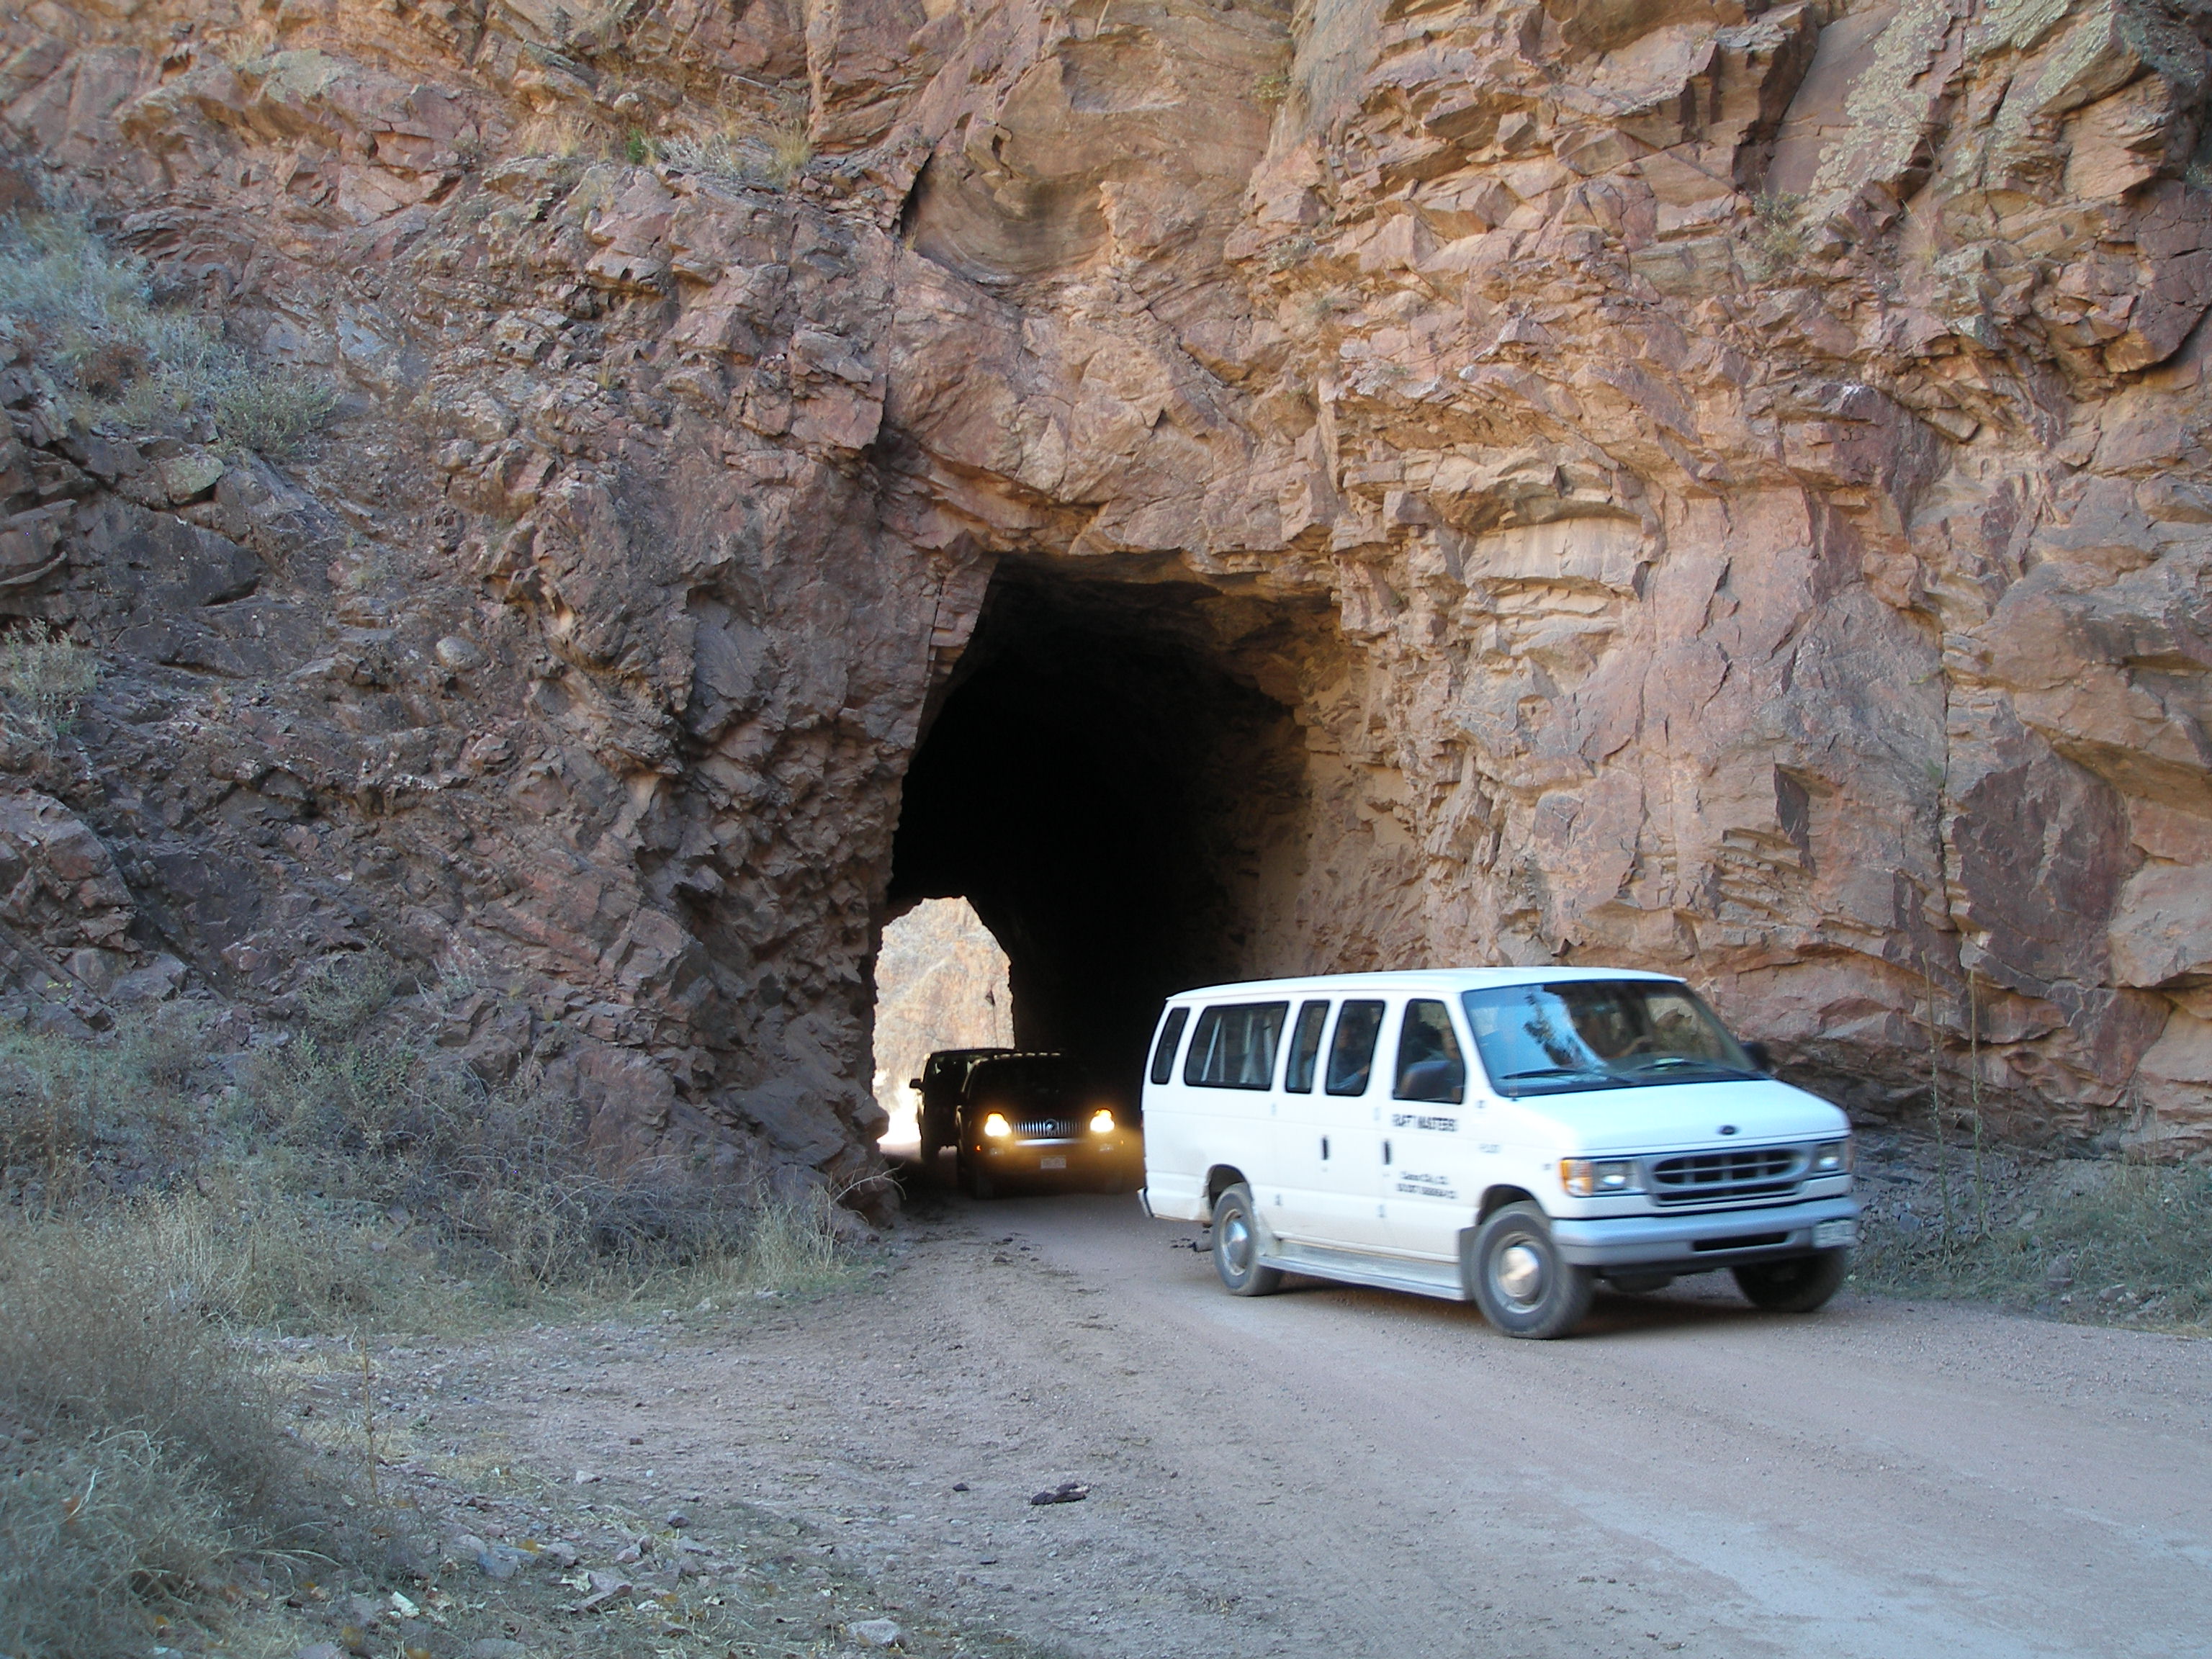 Phantom Canyon Tunnel detail image